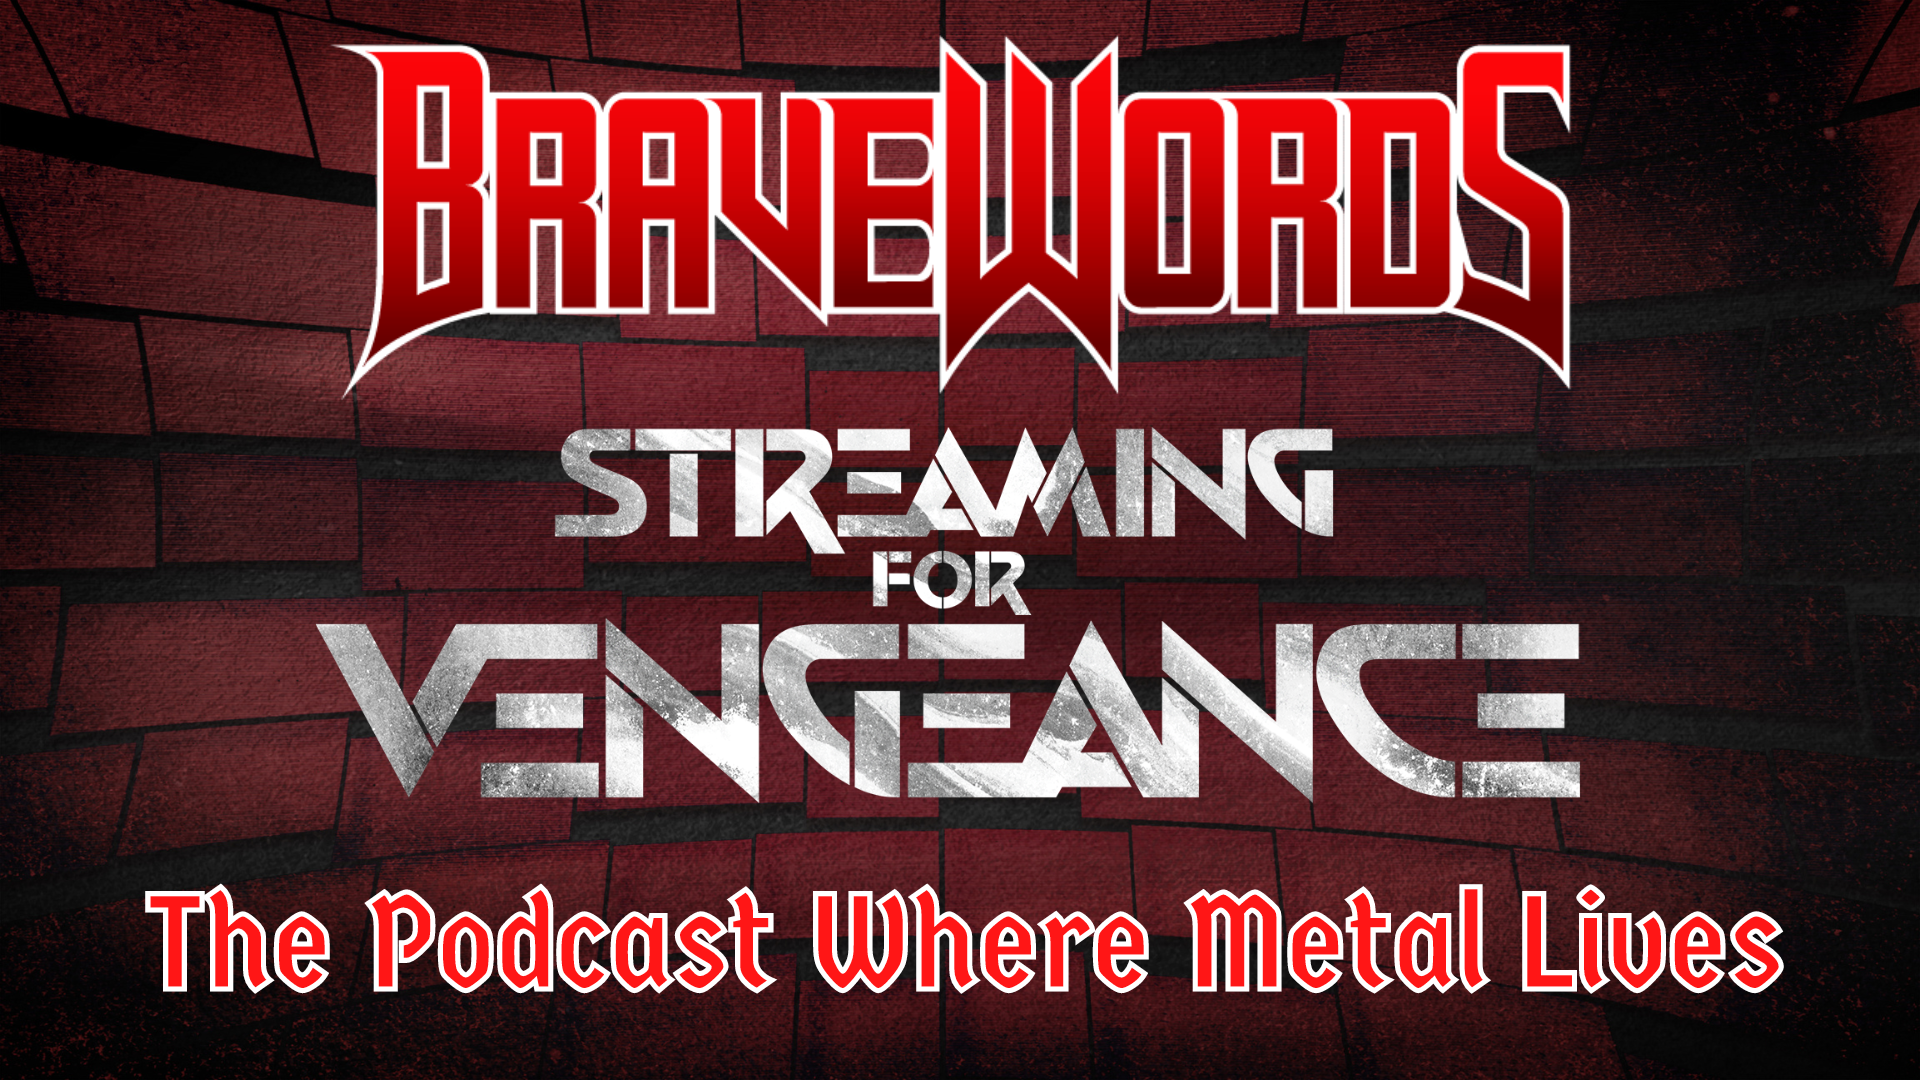 BraveWords Streaming For Vengeance The Podcast Where Metal Lives